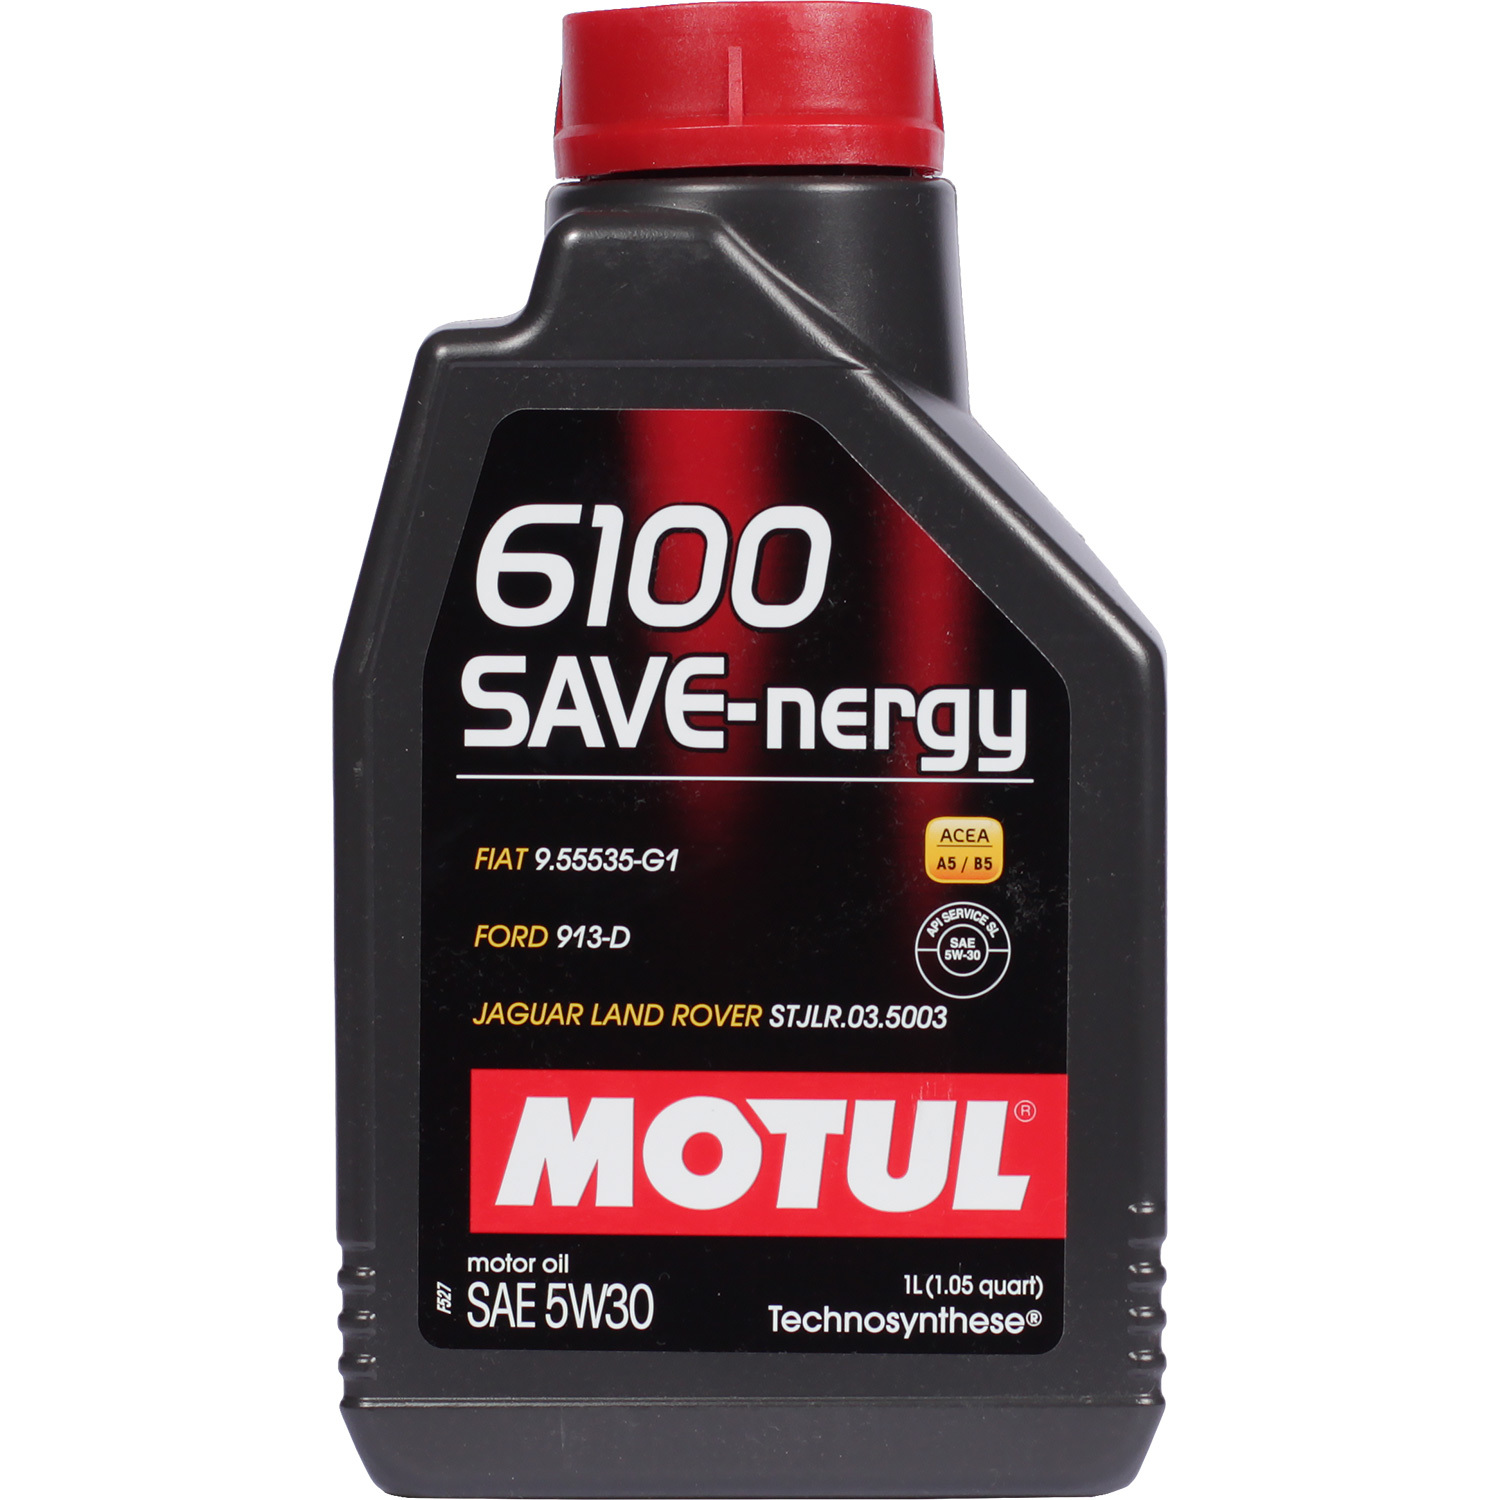 Motul Моторное масло Motul 6100 SAVE-NERGY 5W-30, 1 л motul моторное масло motul specific 0720 5w 30 1 л